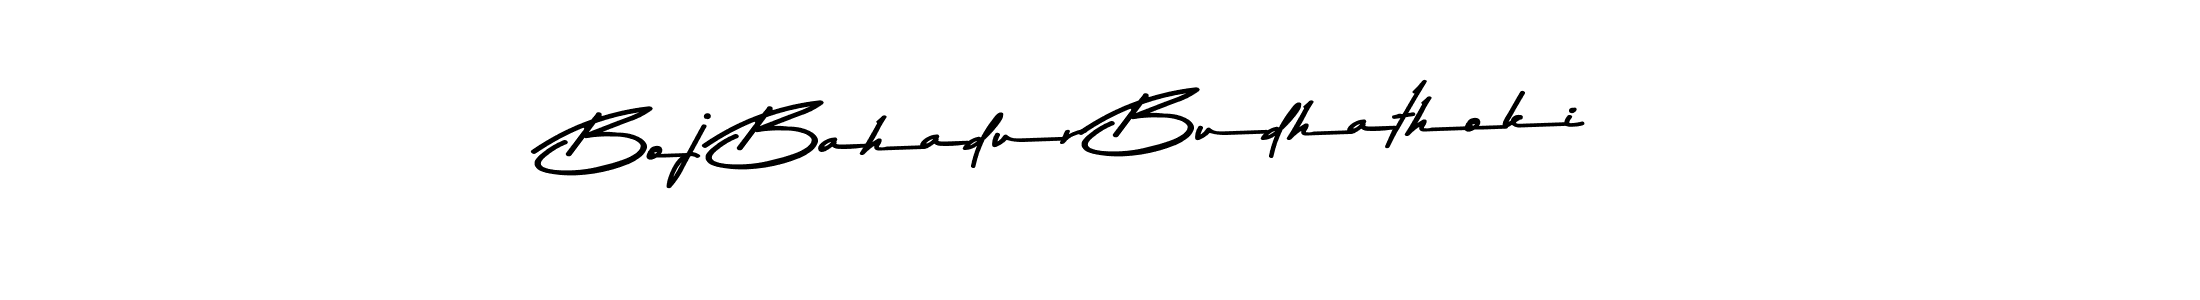 How to Draw Boj Bahadur Budhathoki signature style? Asem Kandis PERSONAL USE is a latest design signature styles for name Boj Bahadur Budhathoki. Boj Bahadur Budhathoki signature style 9 images and pictures png